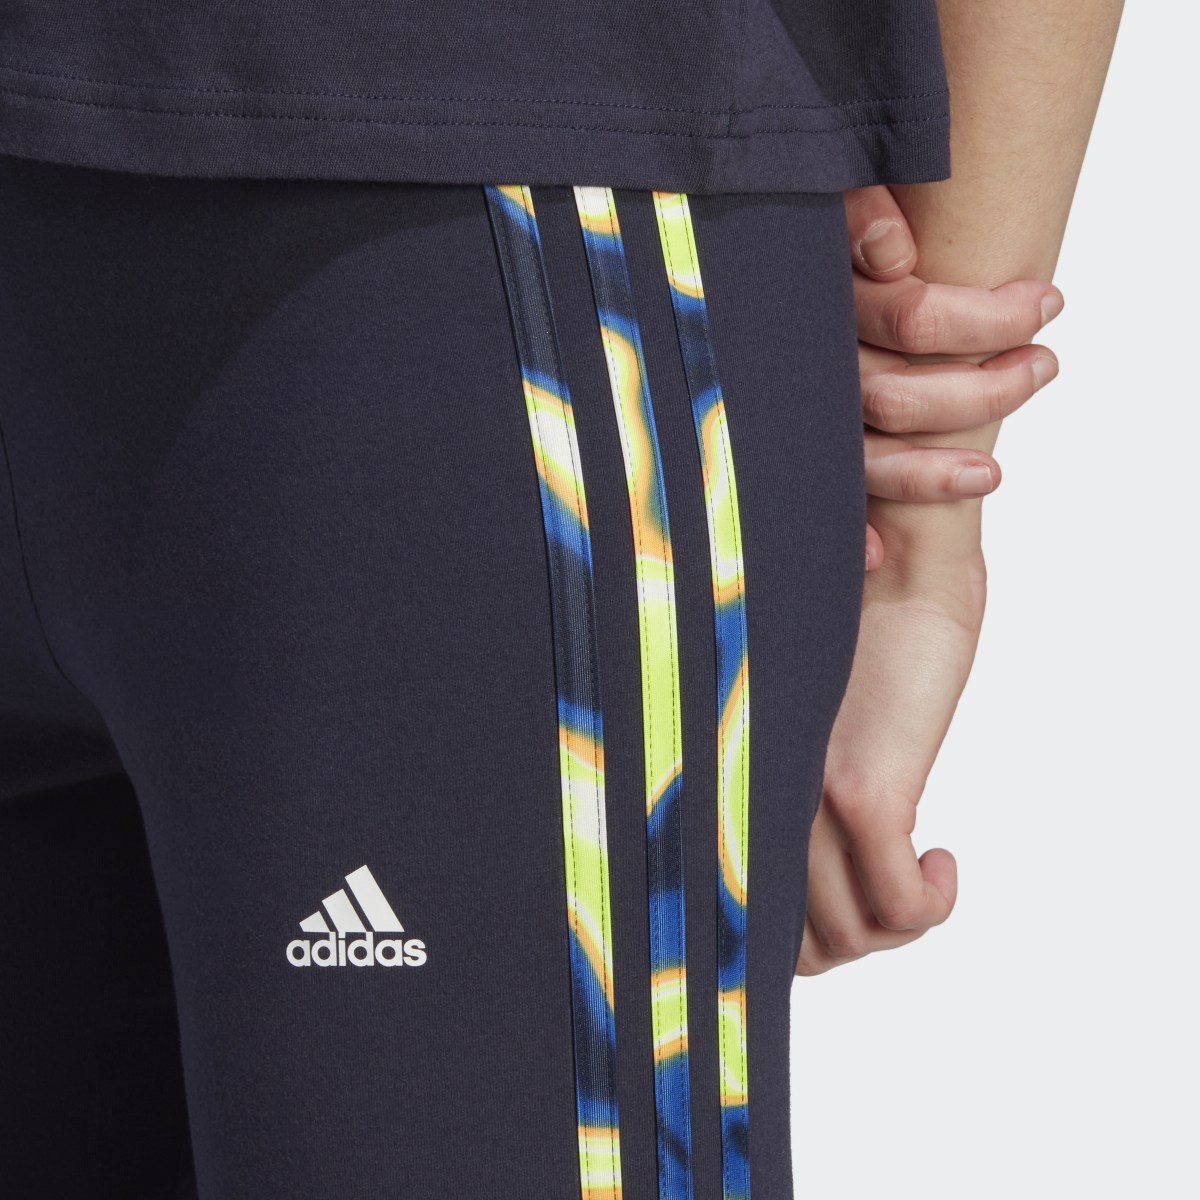 Adidas Vibrant Print 3-Stripes Cotton Leggings. 5